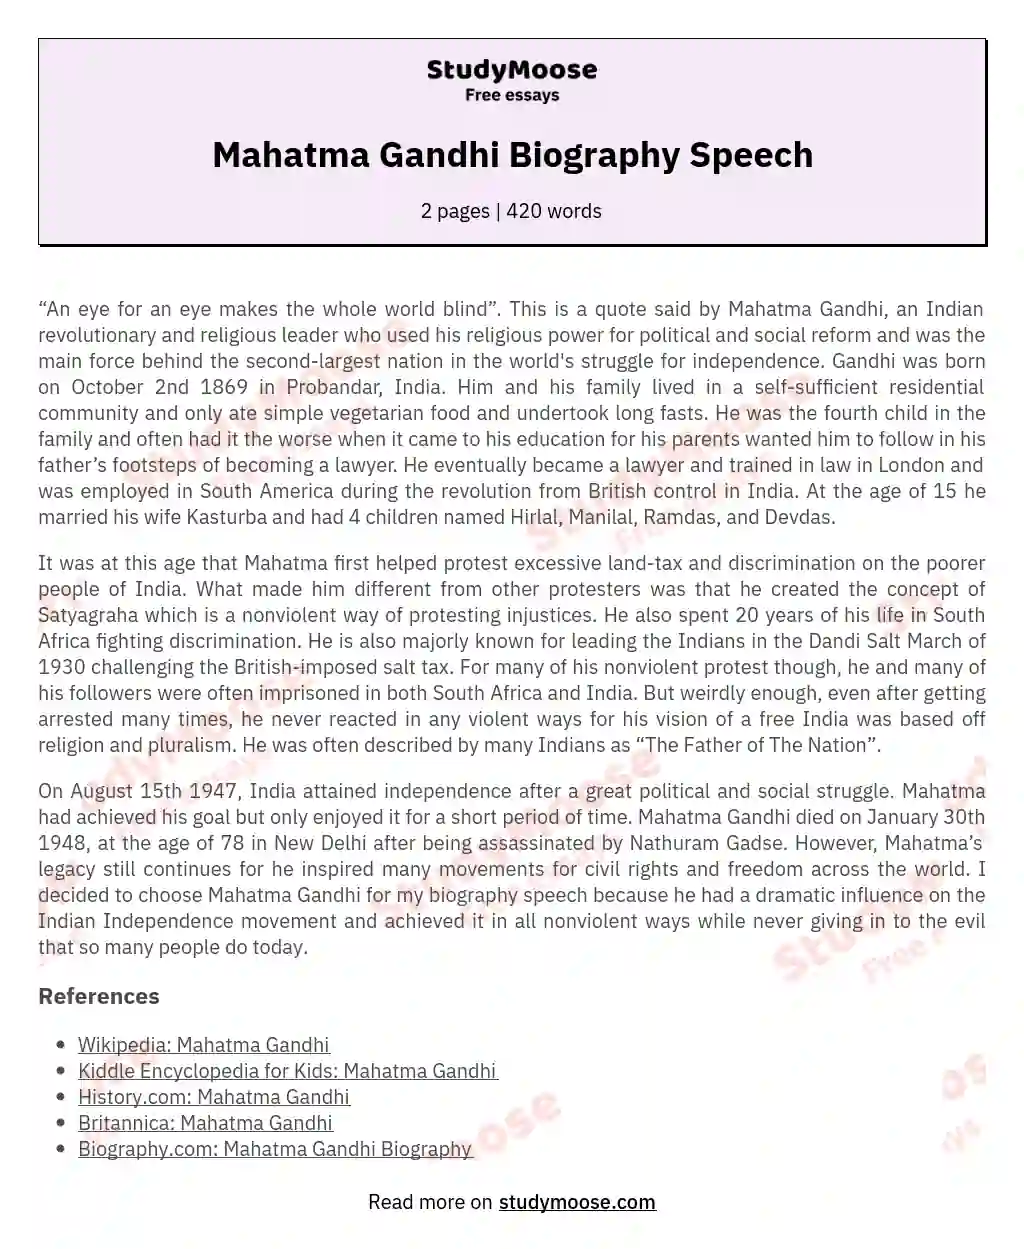 Mahatma Gandhi Biography Speech essay